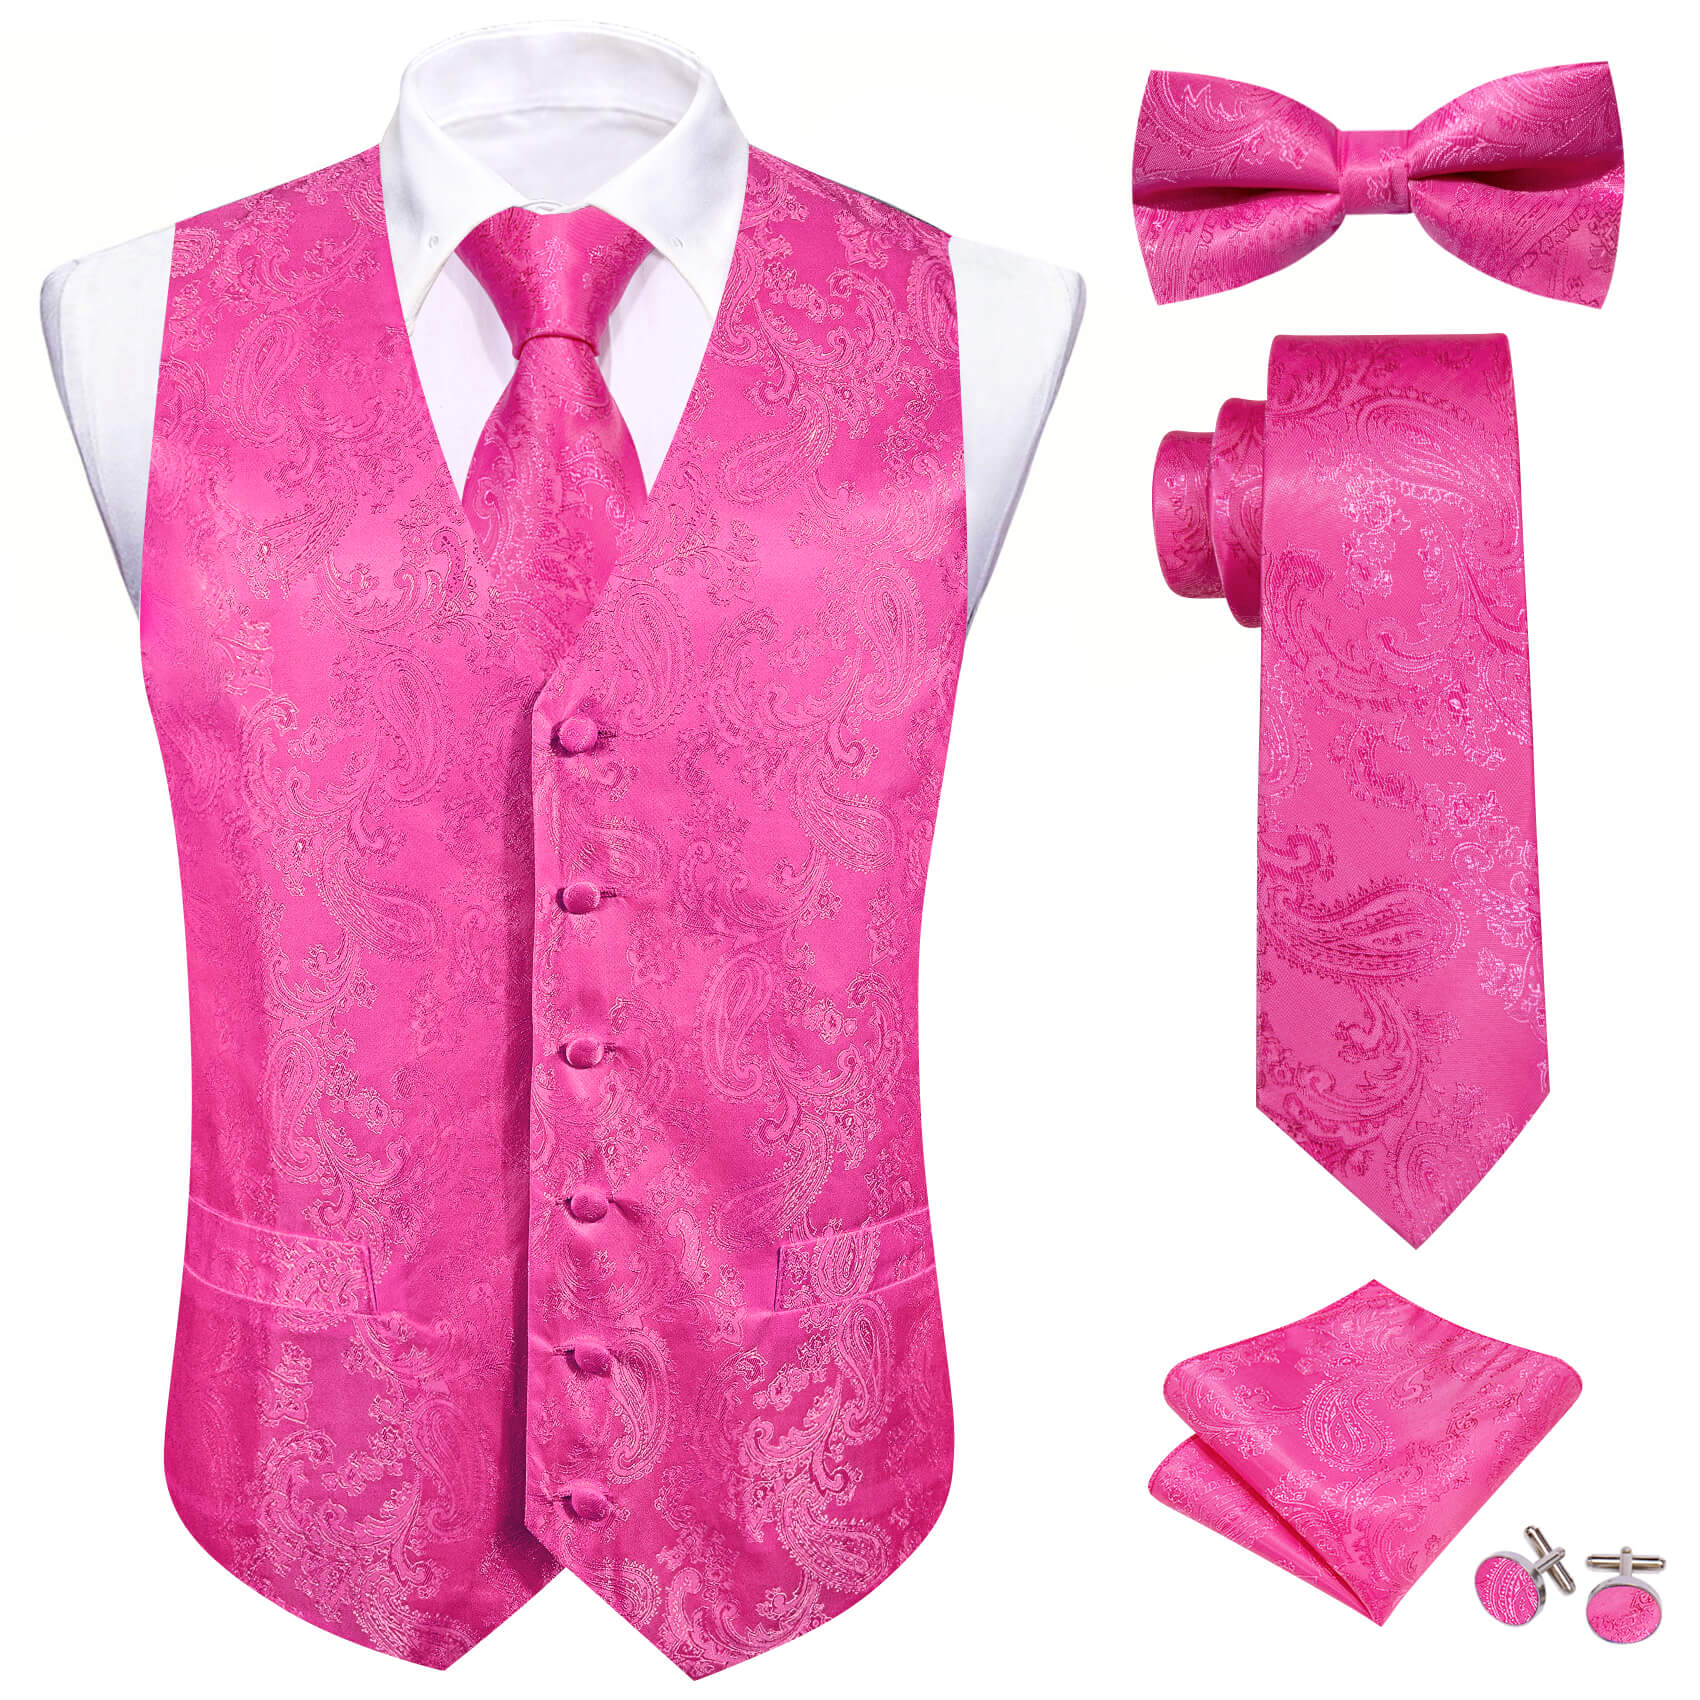  Hot Pink Paisley Vest